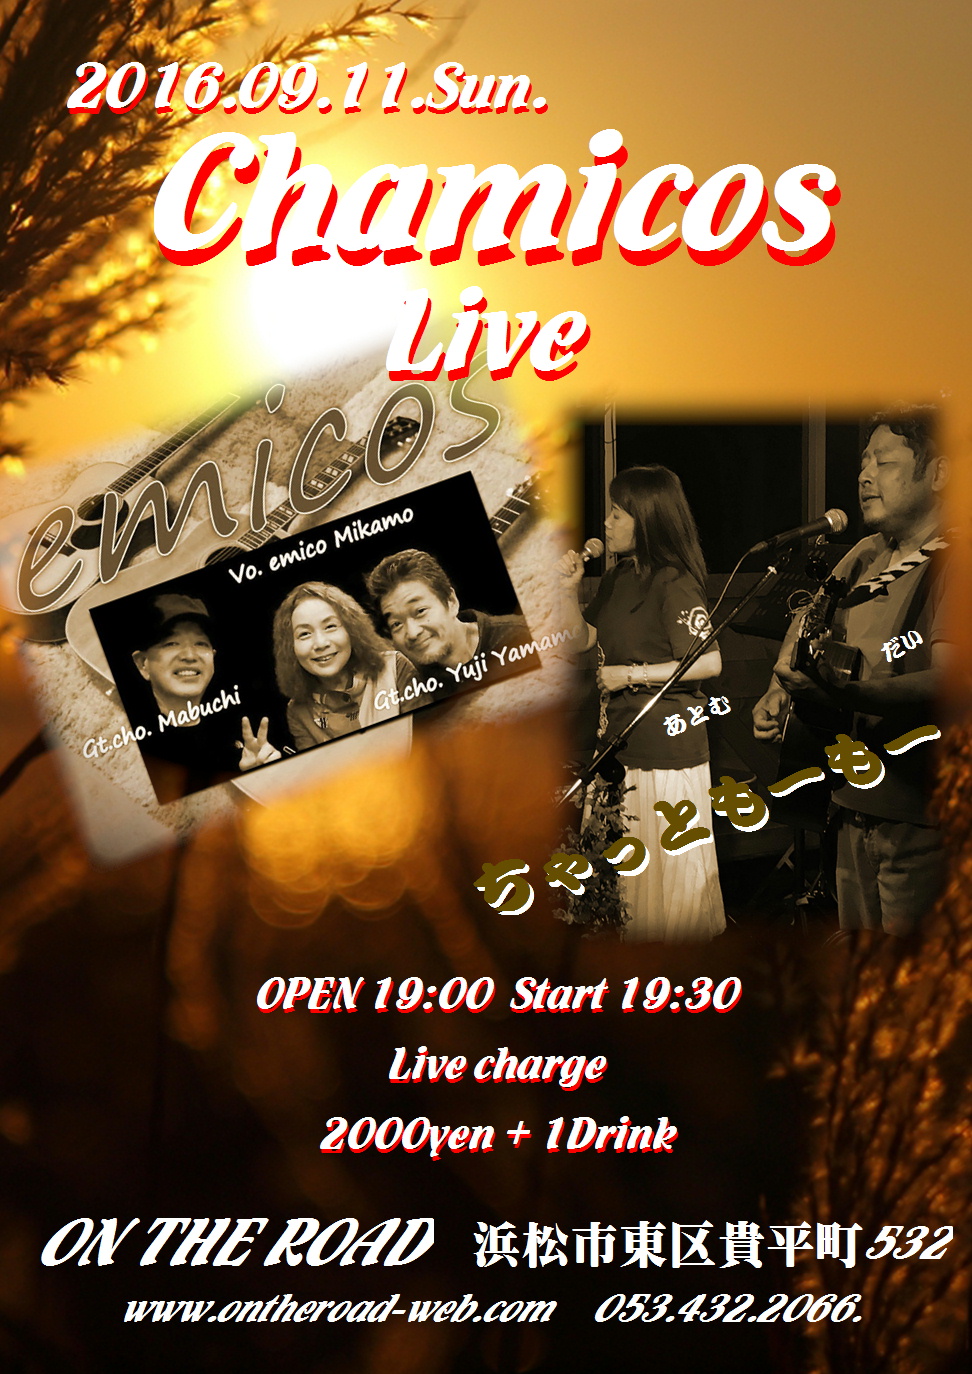 Chamicos Live